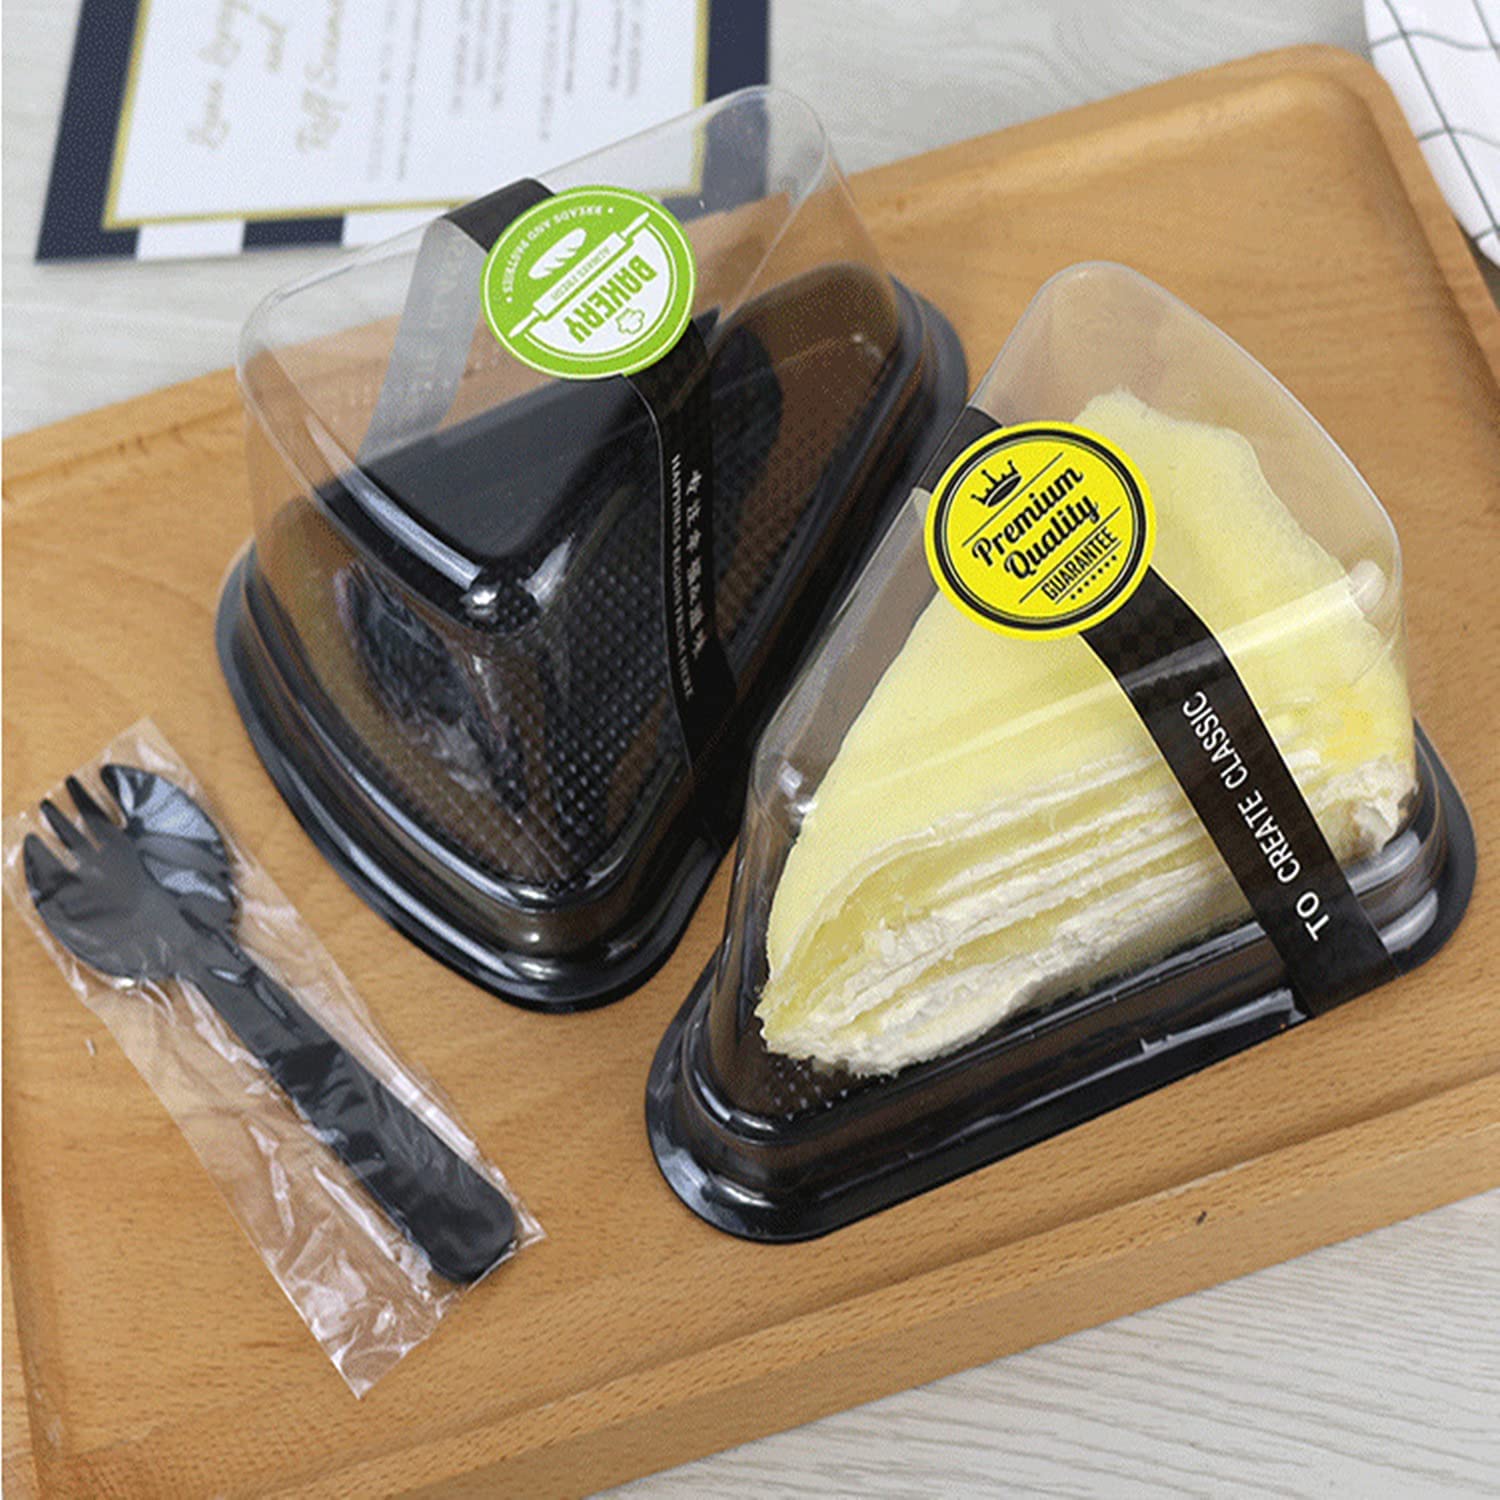 Acrylic Mini Dessert Cake Slice Box Triangle 10Pack